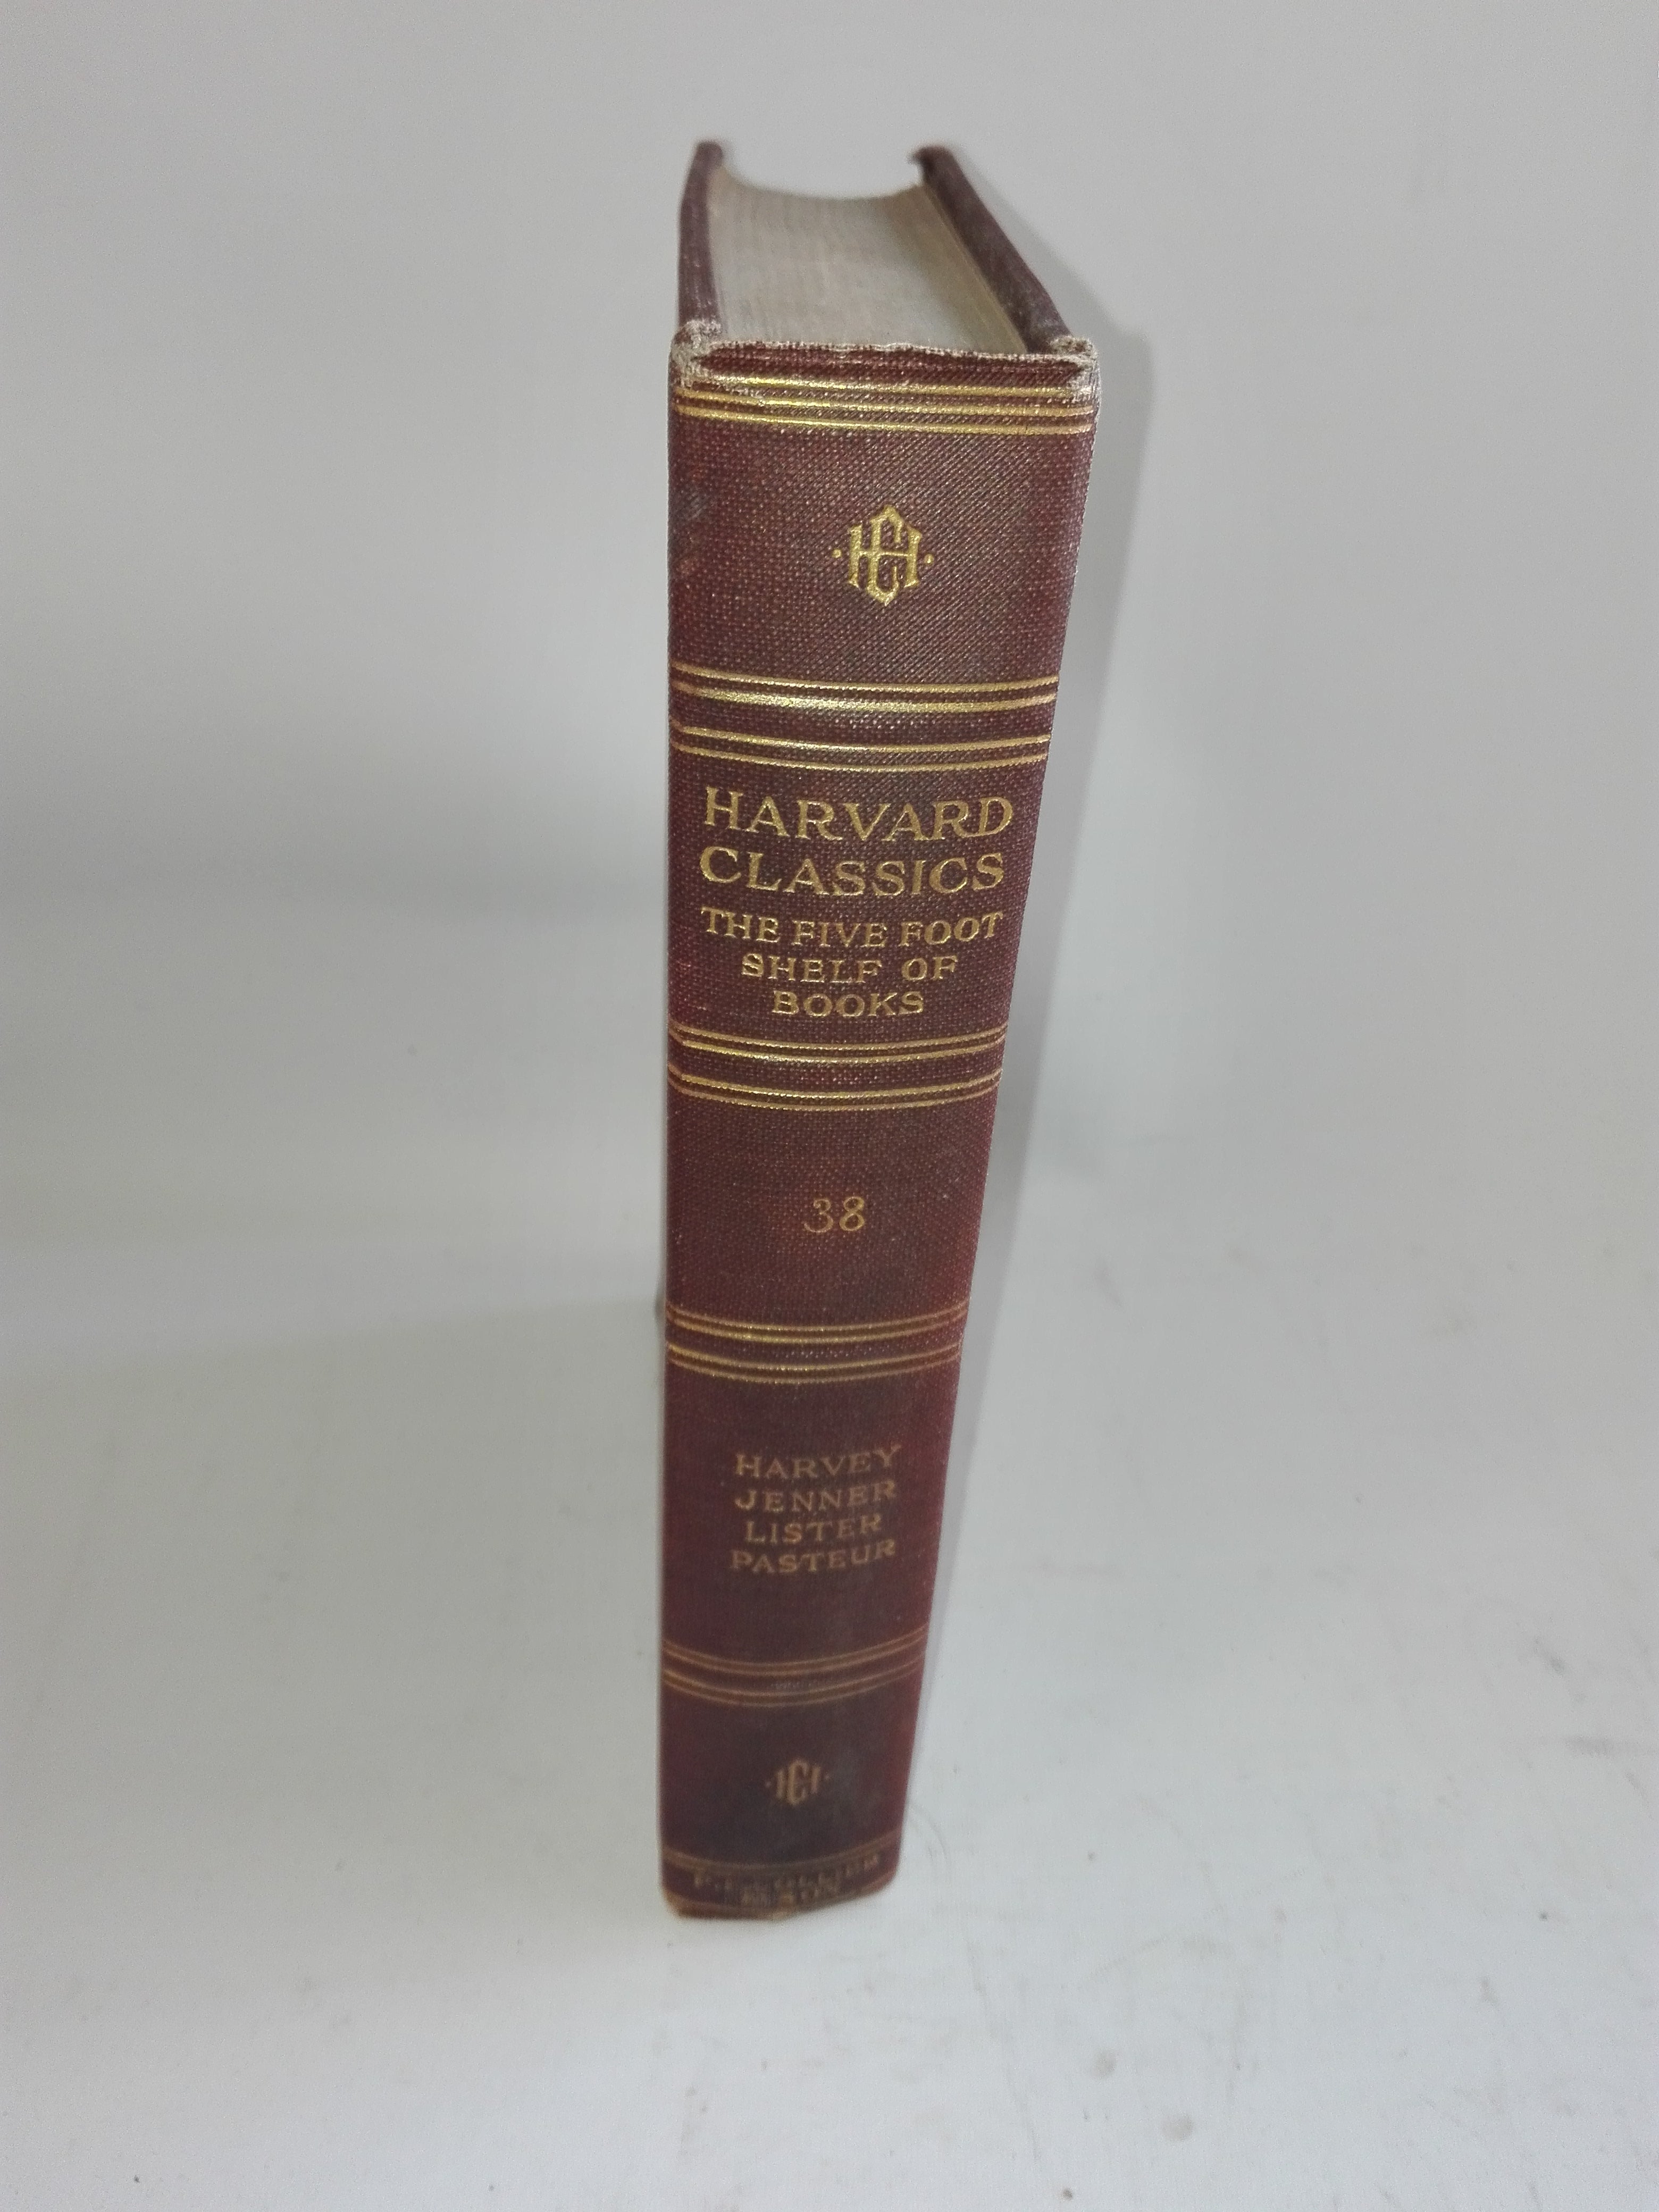 Harvard Classic The Five Foot Shelf Of Books 38